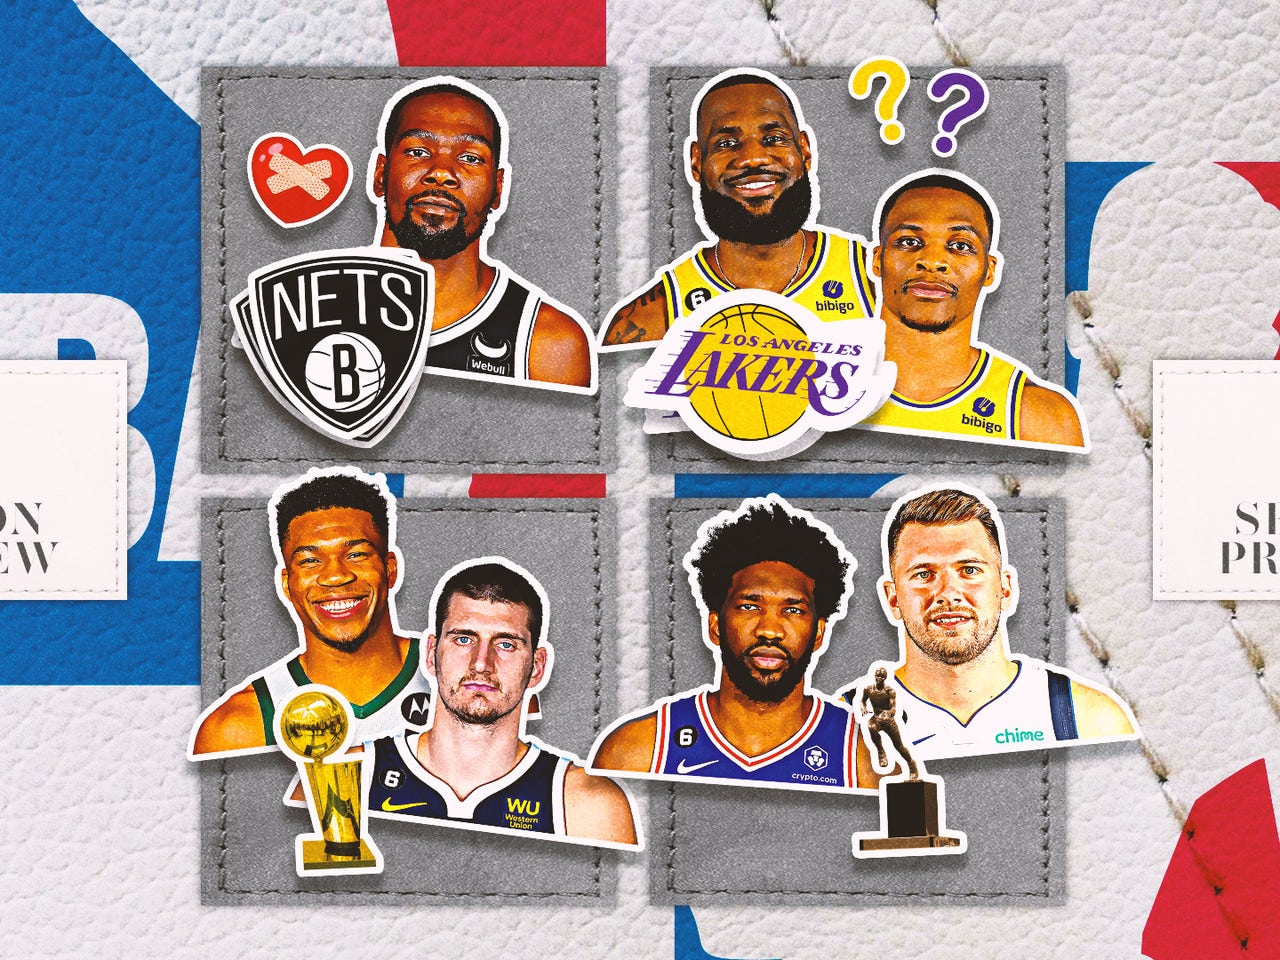 2022-23 NBA Awards Predictions: Kevin Durant Will Win The MVP